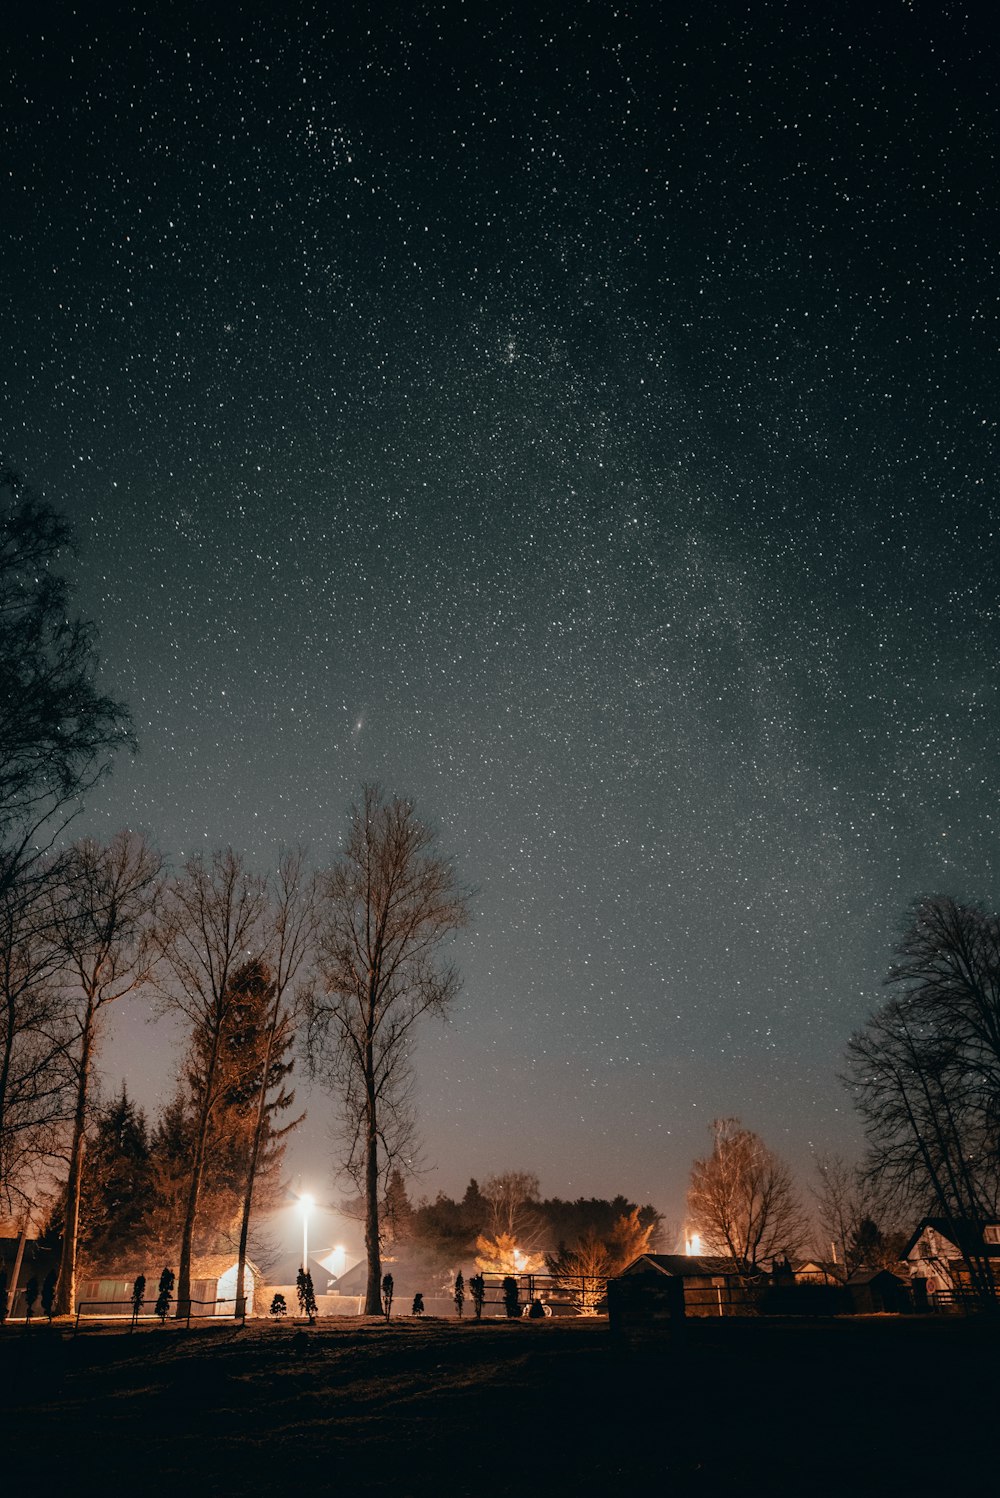 bare trees under starry night